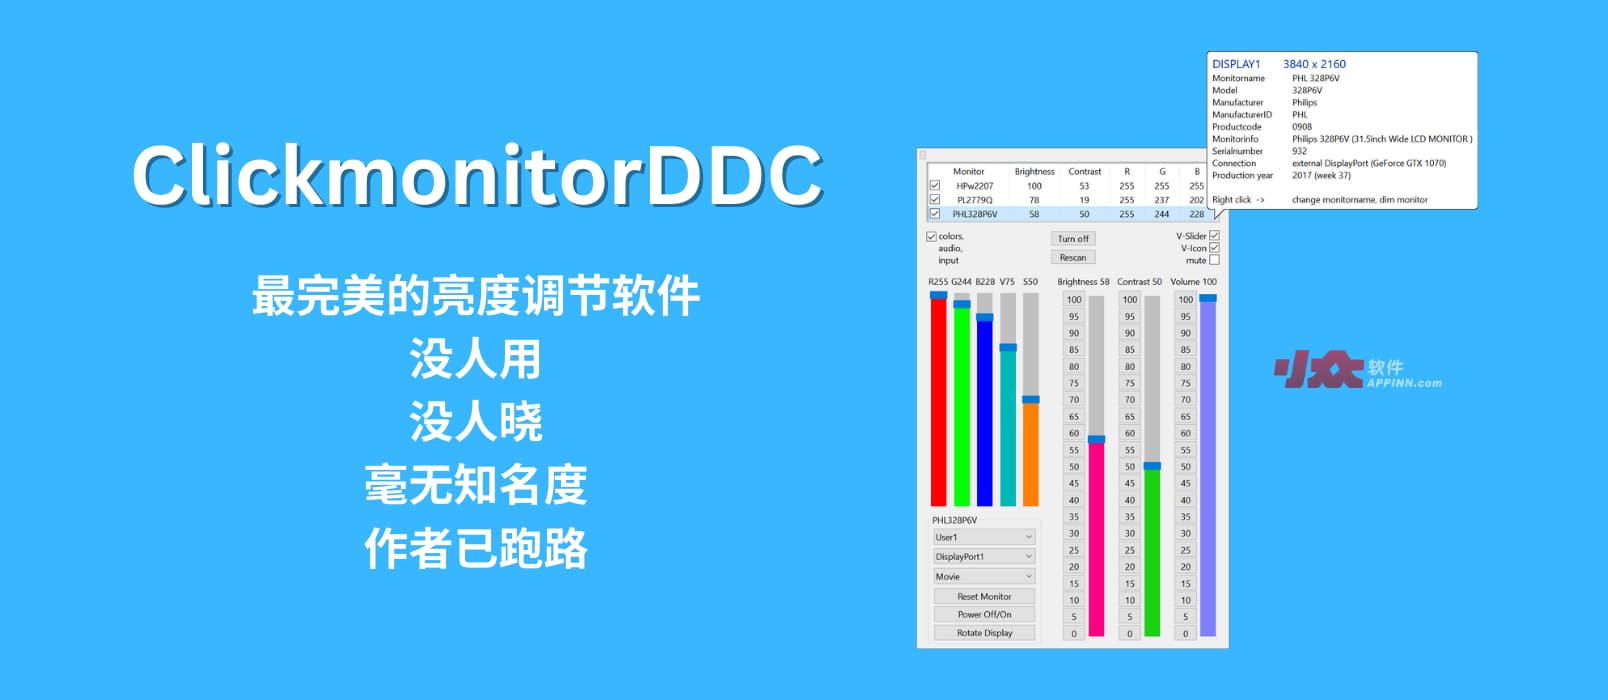 ClickmonitorDDC - 最完美的亮度调节软件｜没人用，没人晓，毫无知名度，作者已跑路[Windows]